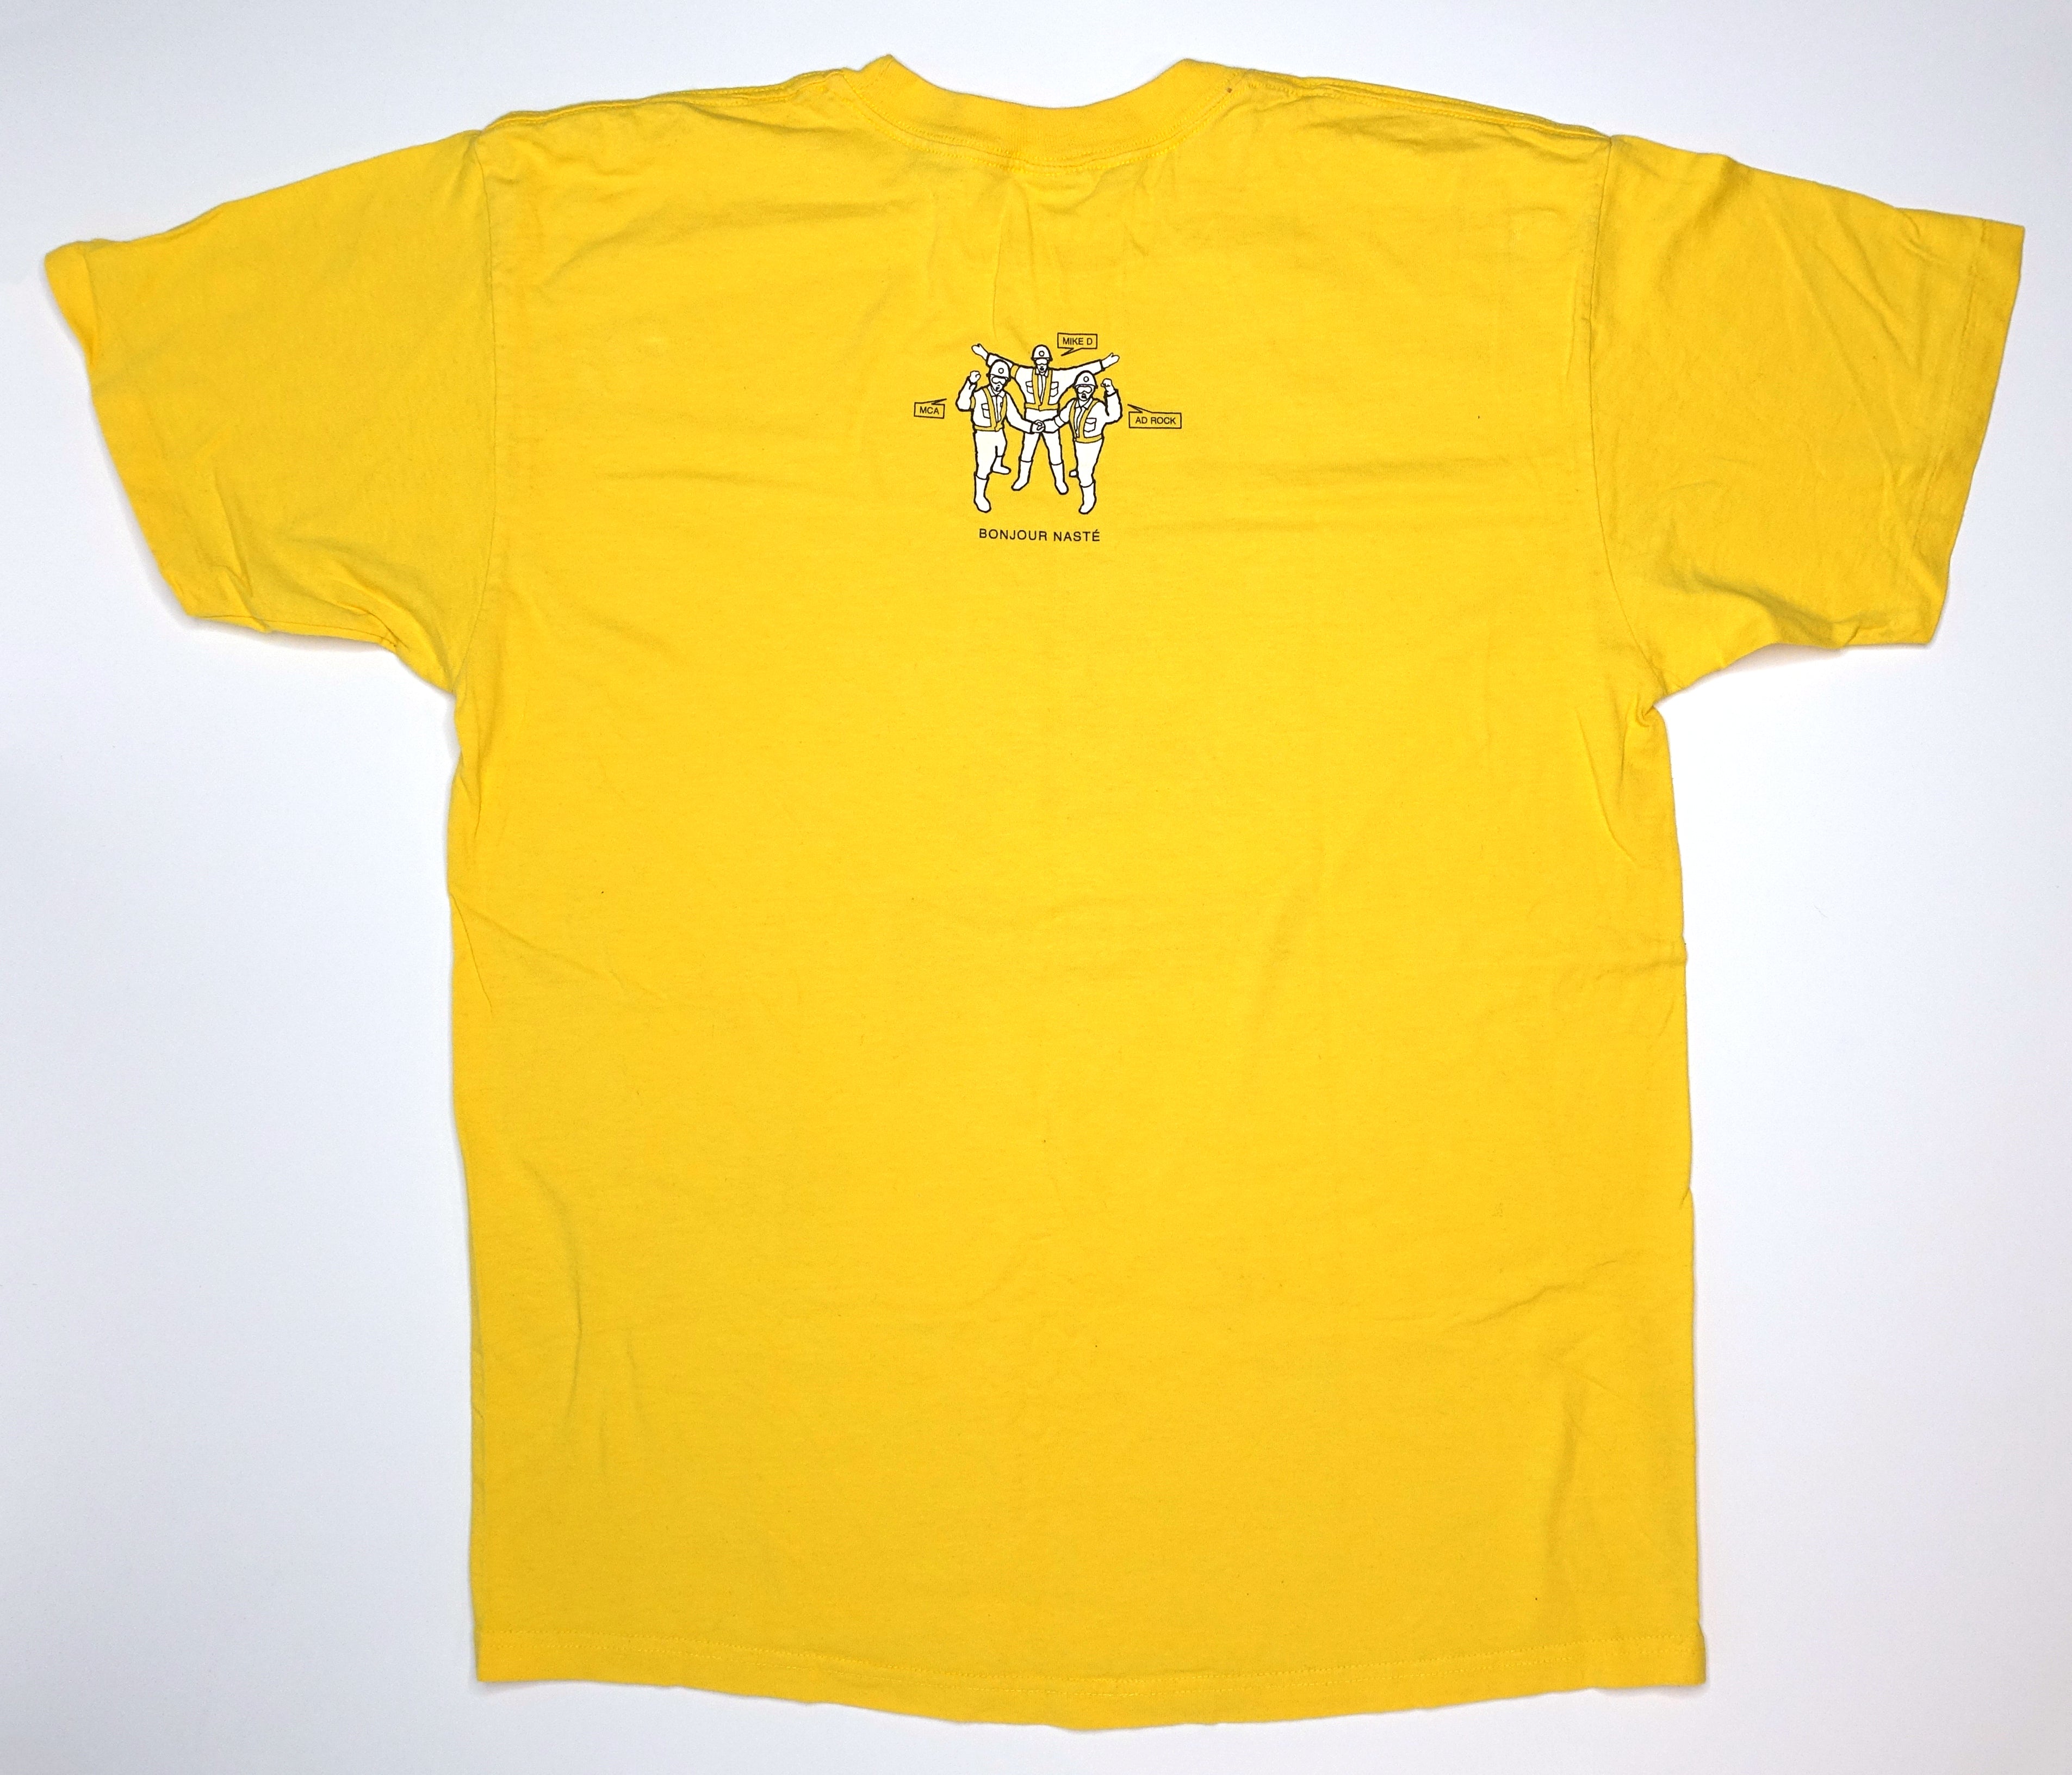 Beastie Boys - In The Round Hello Nasty 1998 Tour Shirt Size XL